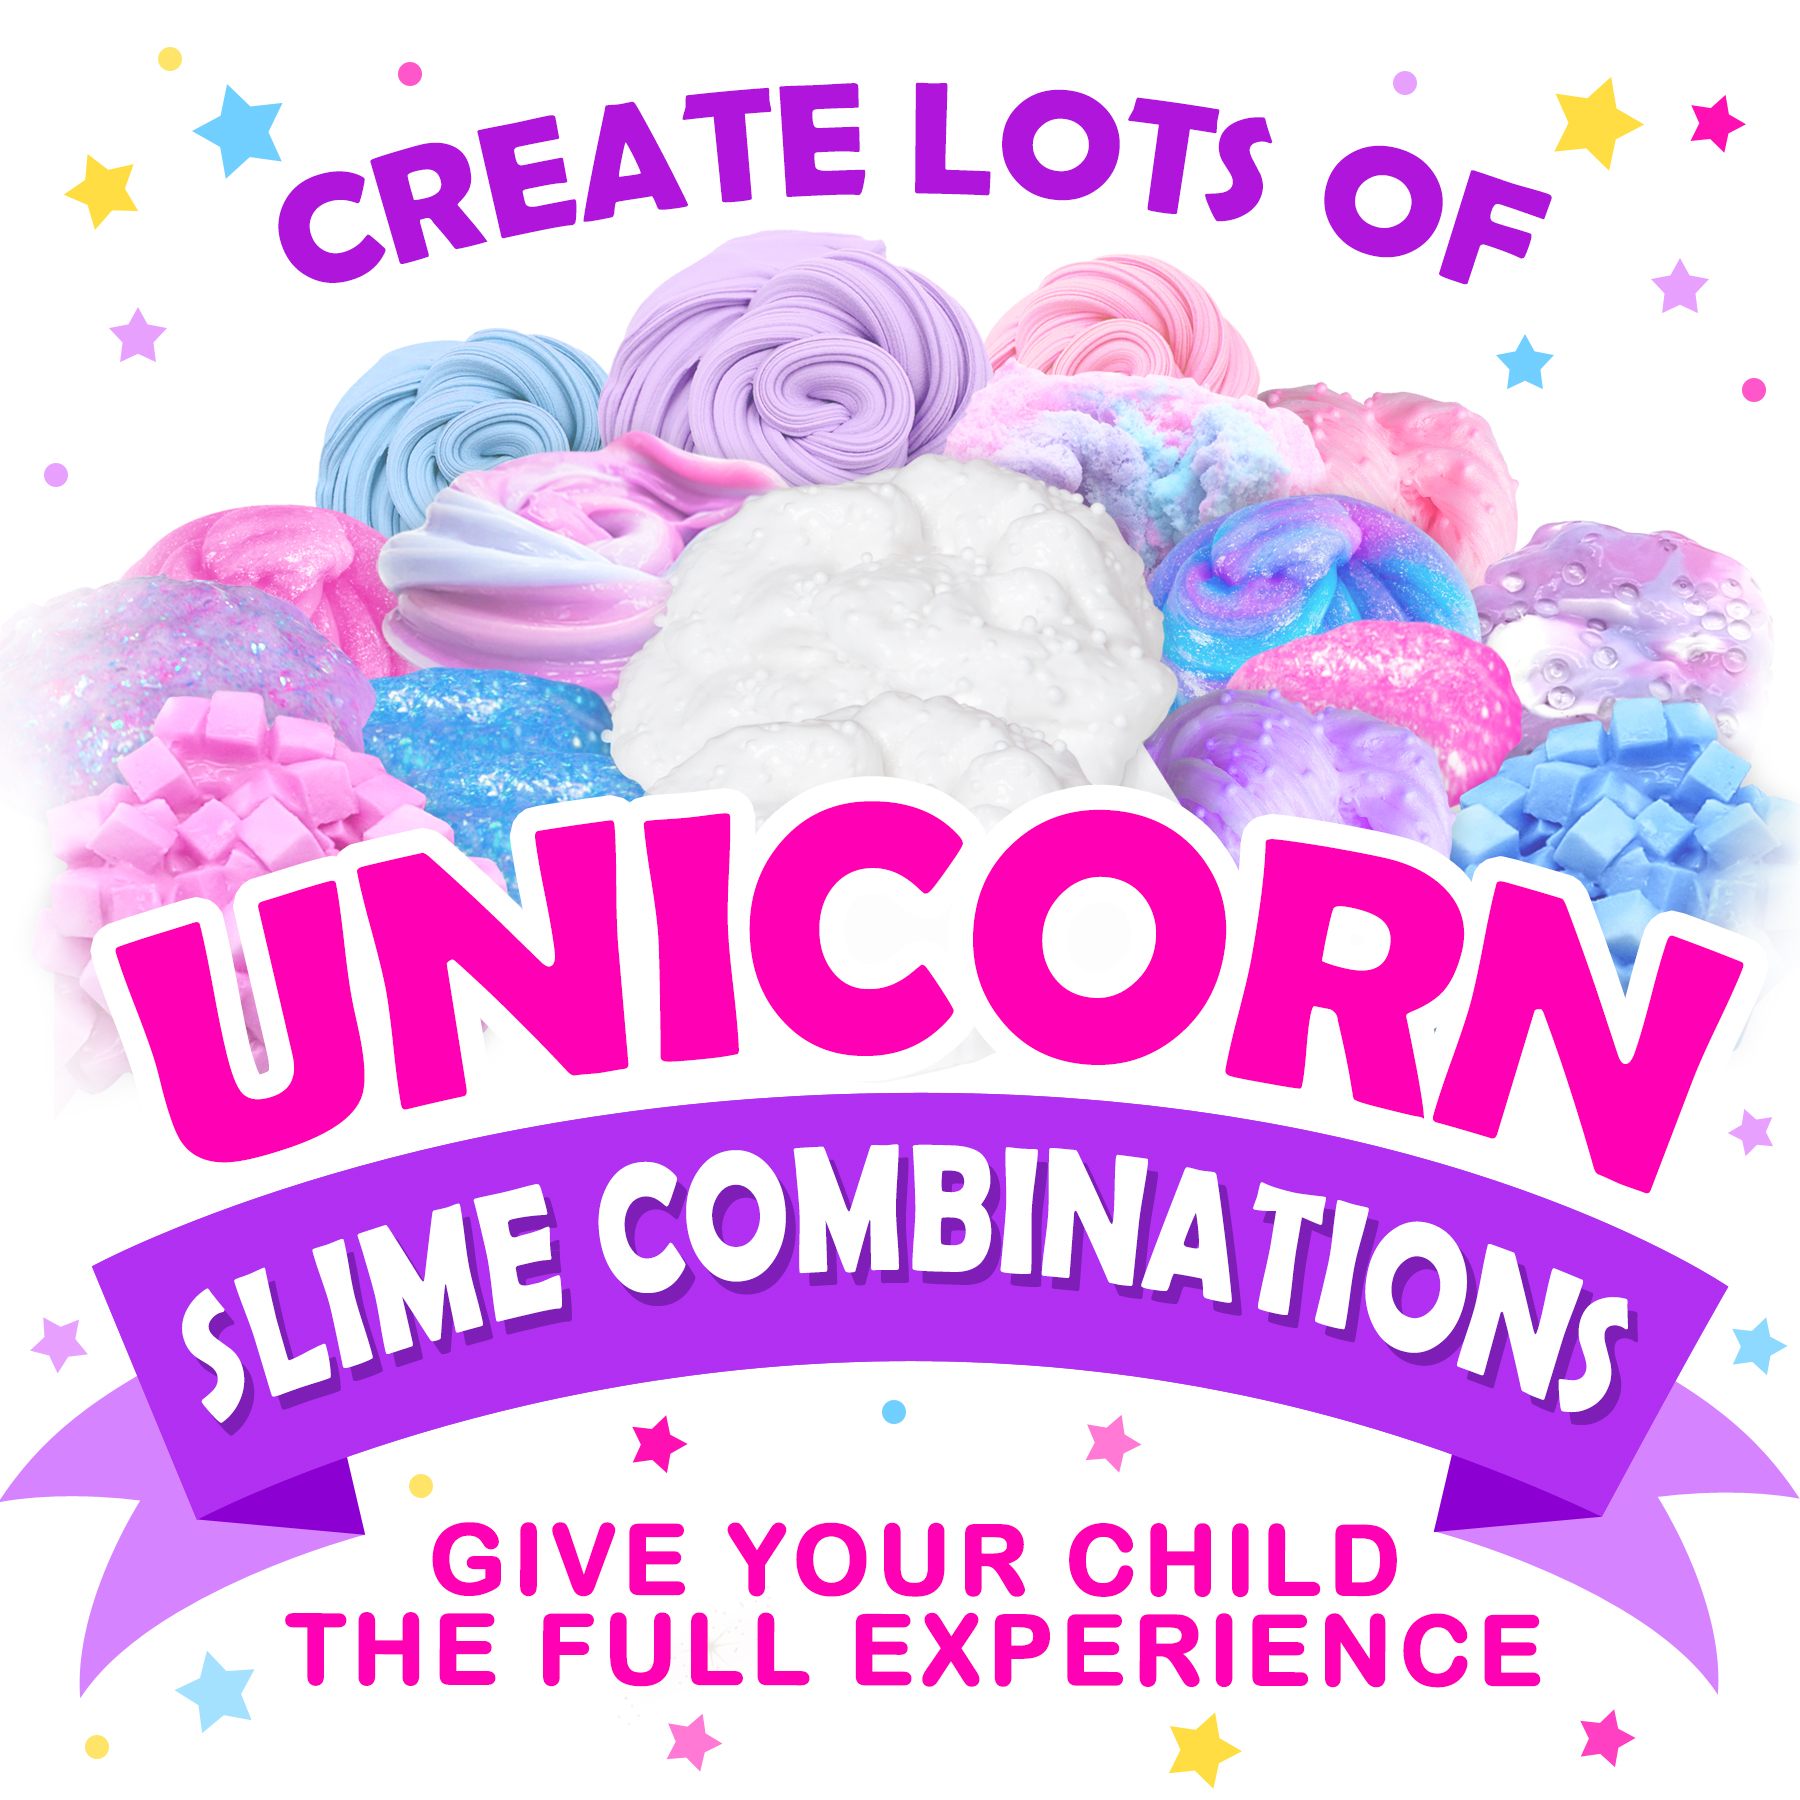 Original Stationery Ultimate Slime Kit, Awesome Pink Slime Kit to